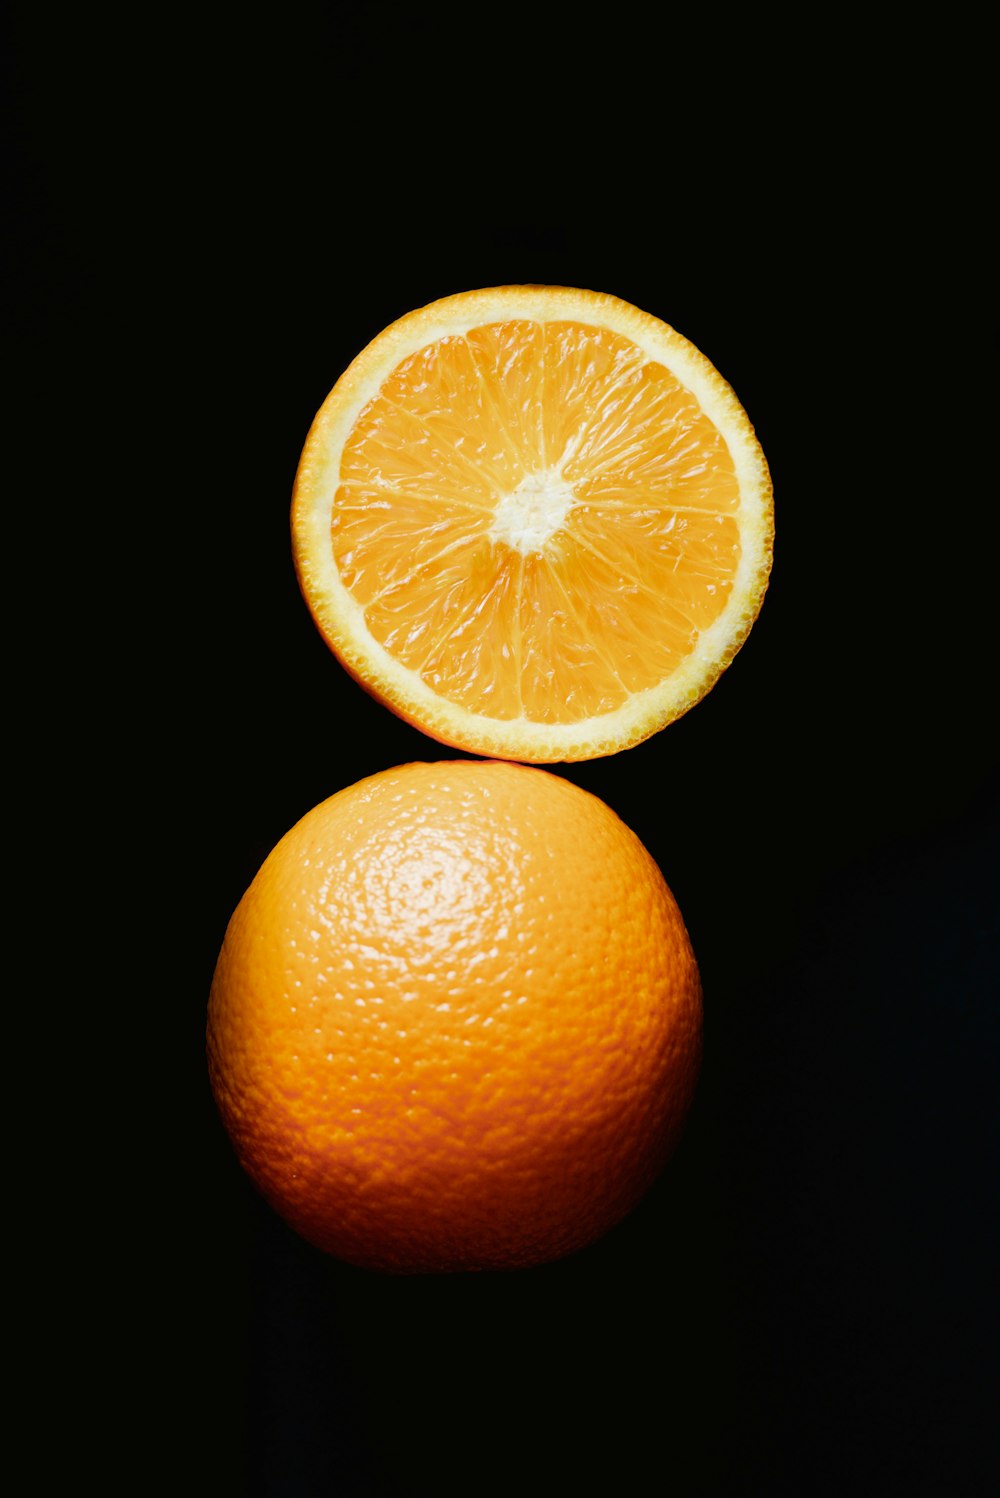 a lemon next to a whole orange